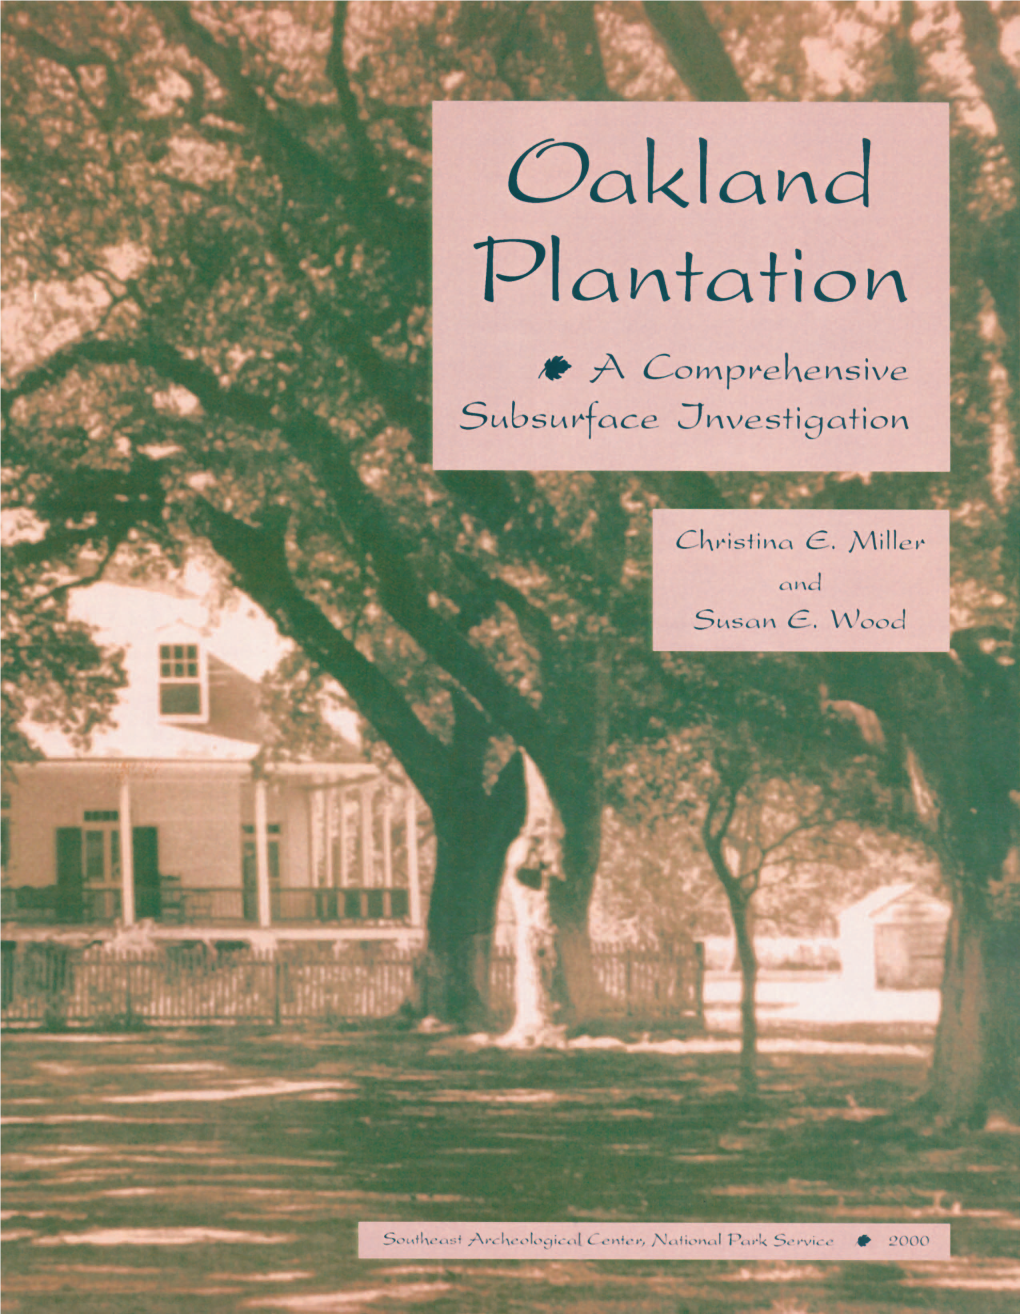 Oakland Plantation: a Comprehensive Subsurface Investigation